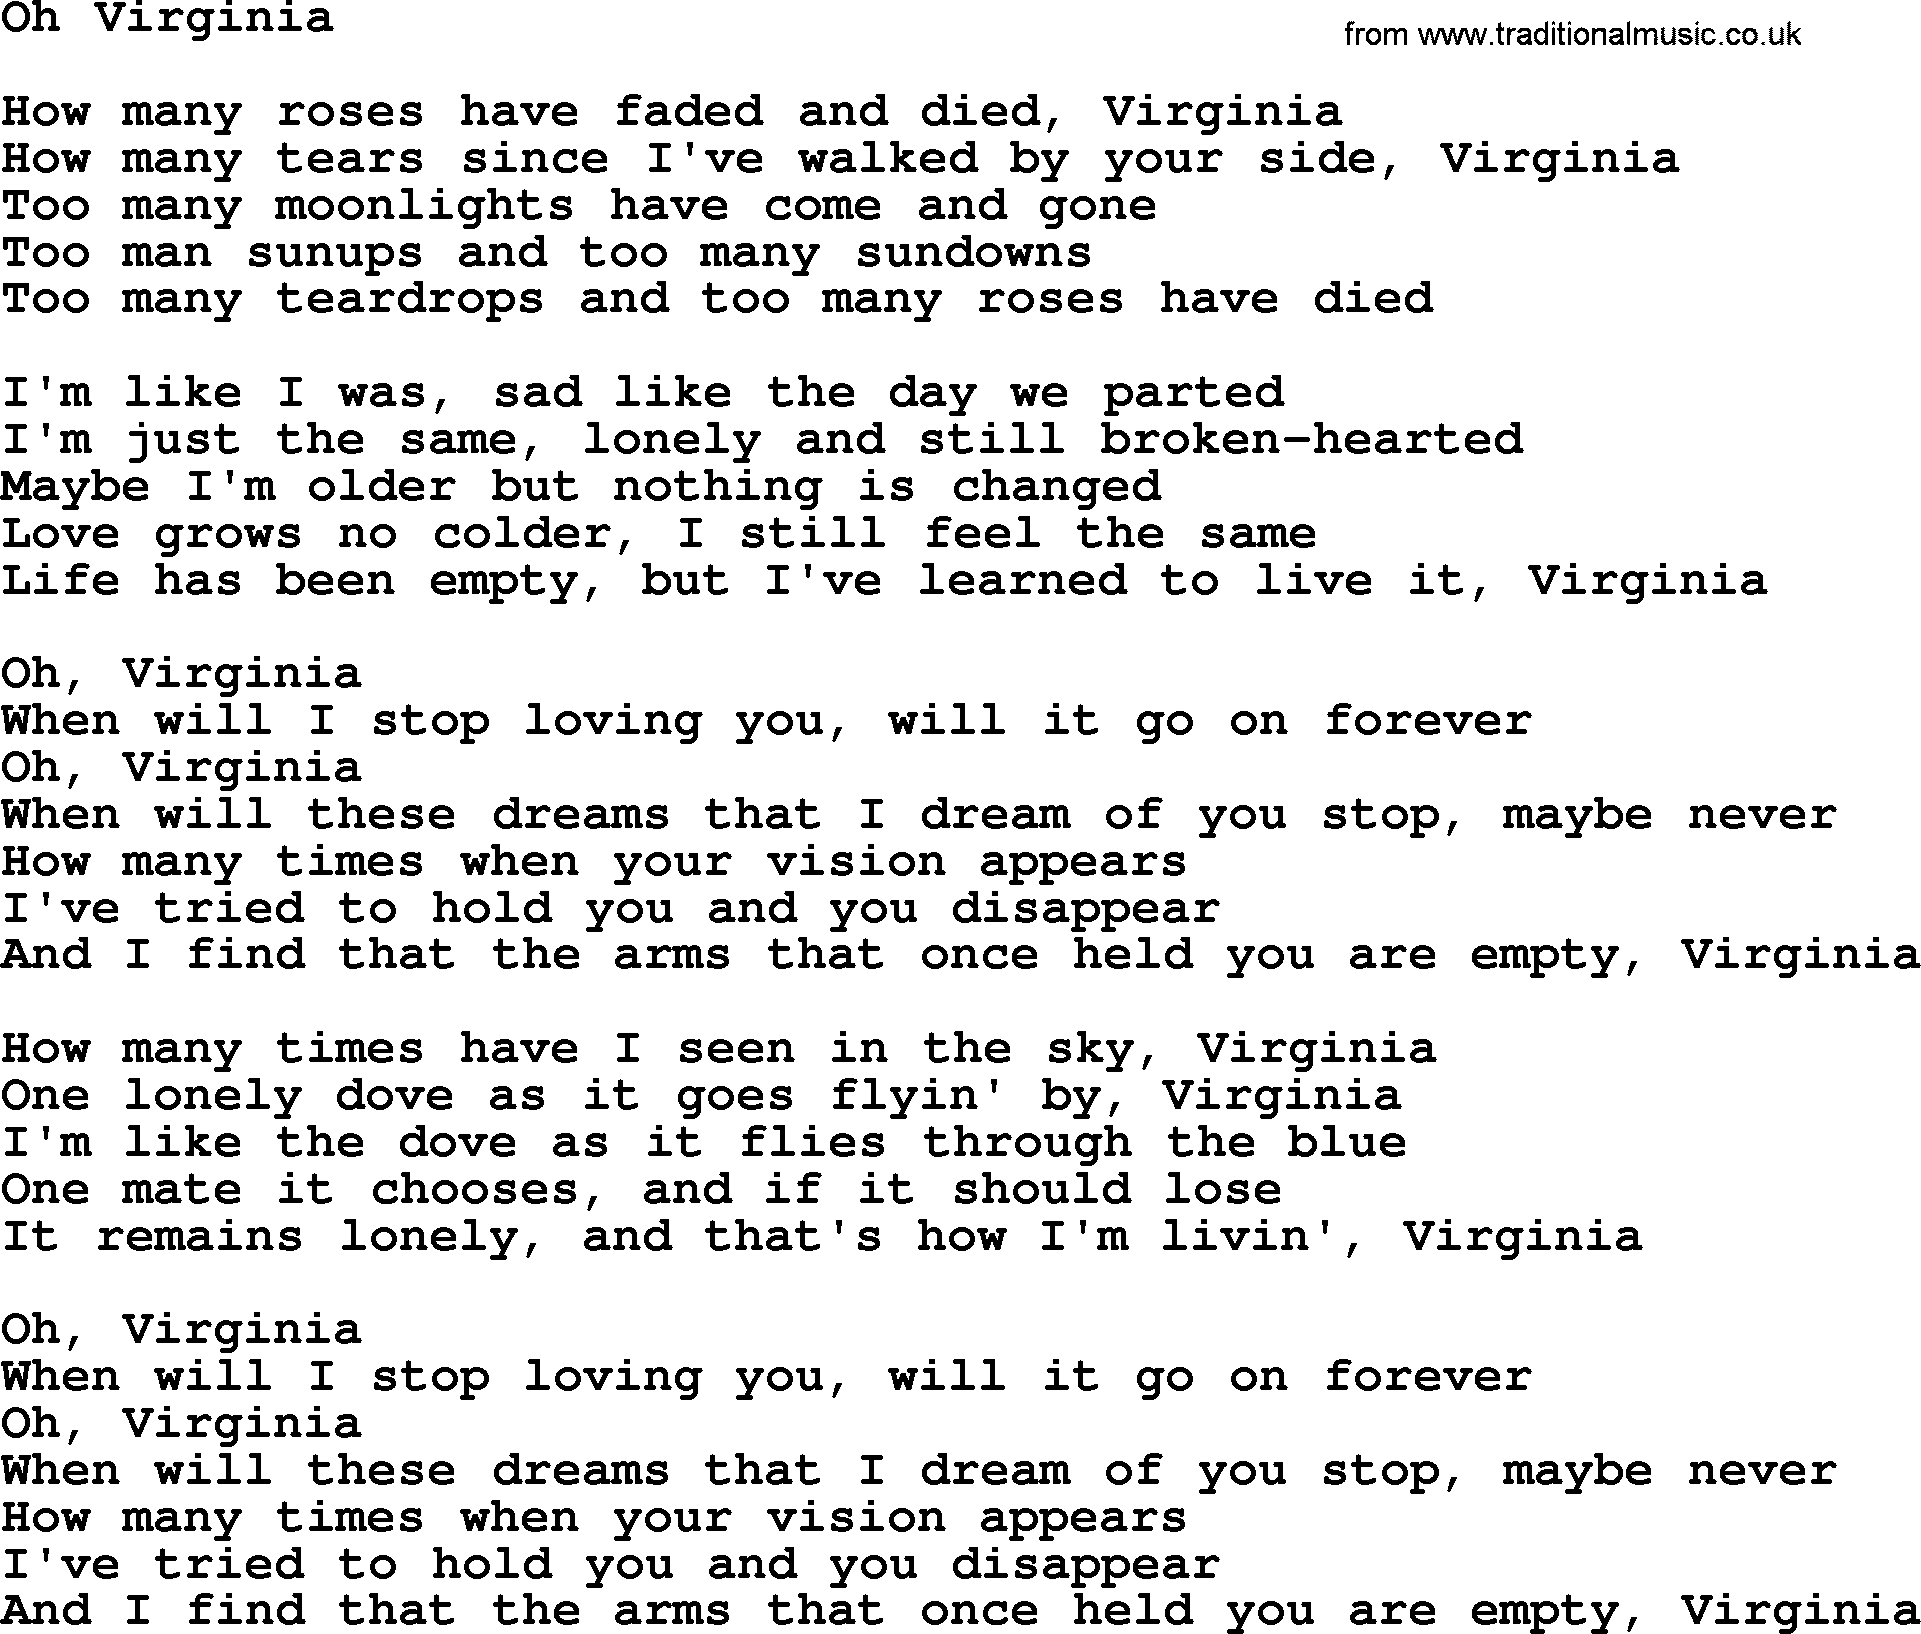 Marty Robbins song: Oh Virginia, lyrics